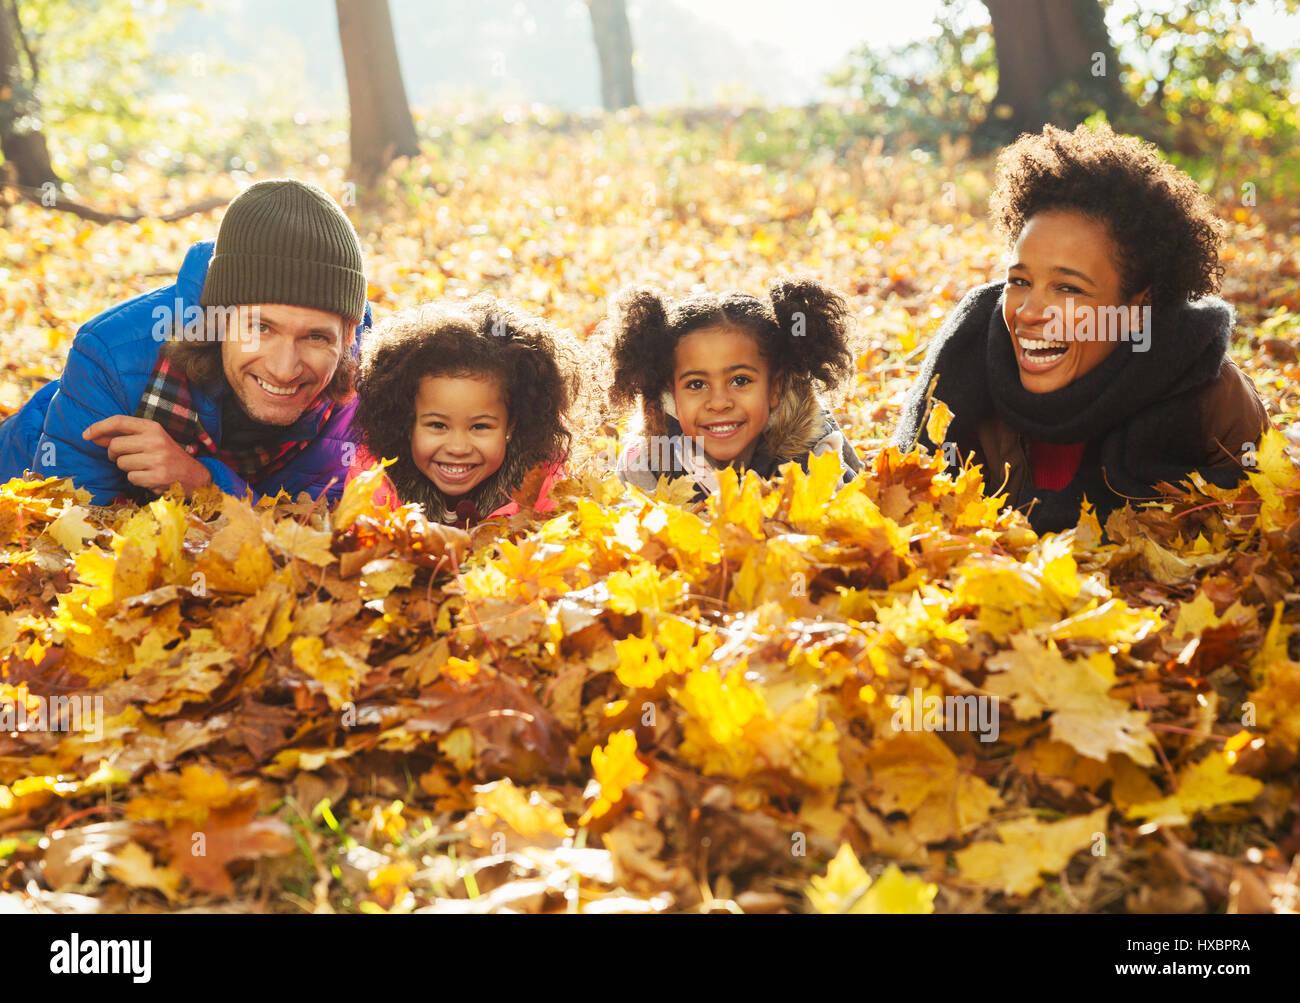 Porträt, Lächeln, junge Familien legen im Herbst Blätter im sonnigen Wald Stockfoto